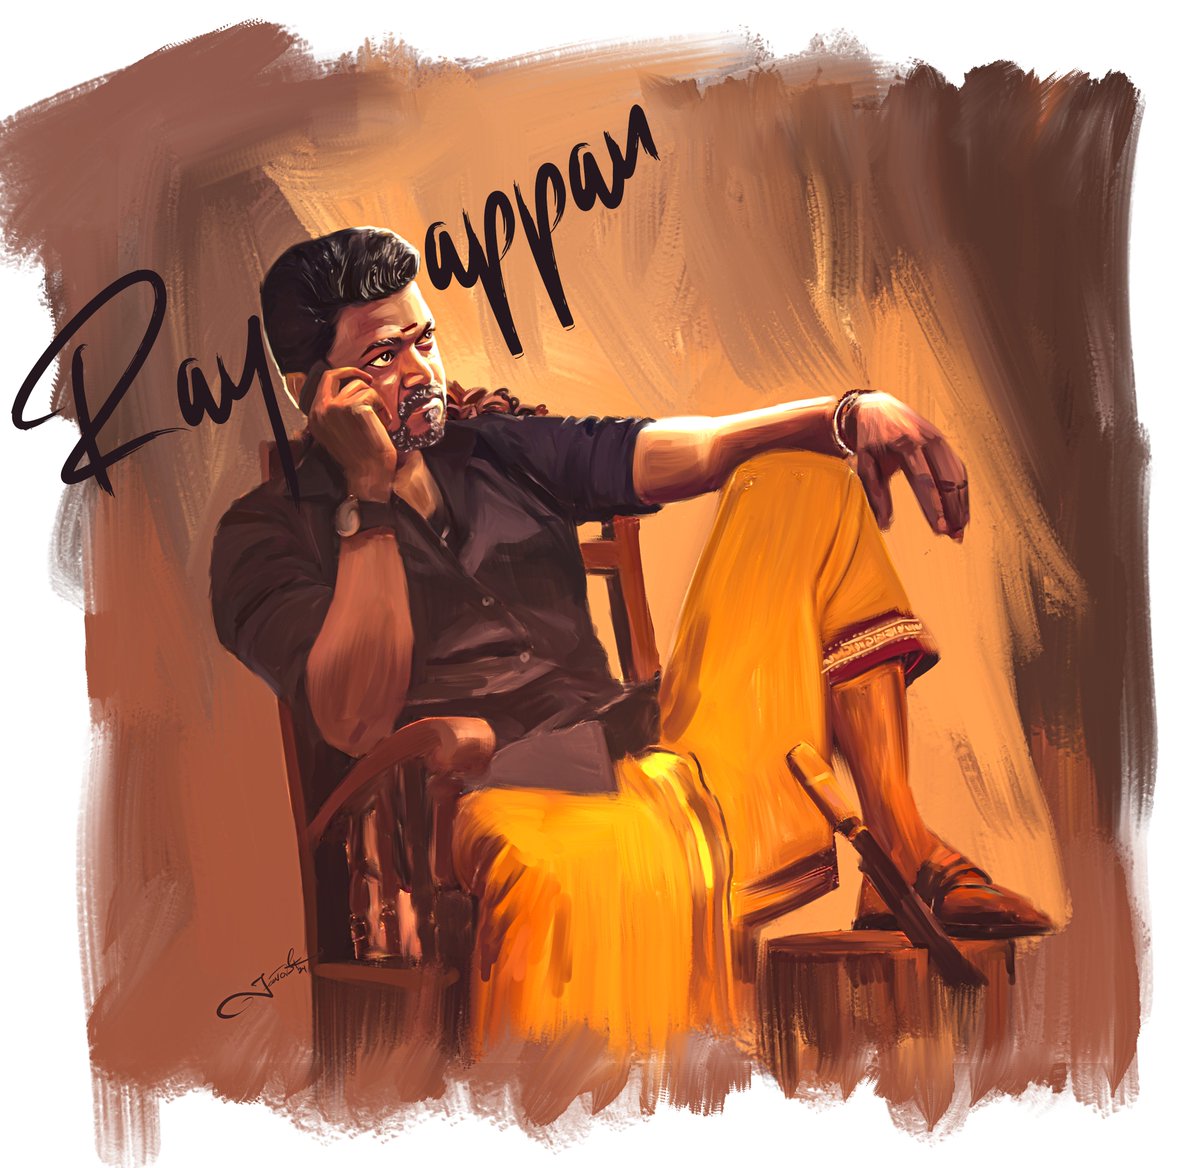 Michael Rayappan Thalapathy Vijay Painting 2024
#MichaelRayappan #Rayappan #ThalapathyVijay𓃵 #Vijay #thalapathy69 #TheGreatestOfAllTime #TheGoatArrivesOnSept5th #thegoatarrivesonsept5 #Bigil 
@actorvijay @ActorVijayFC @ActorVijayUniv @ActorVijayFan1 @Jagadishbliss